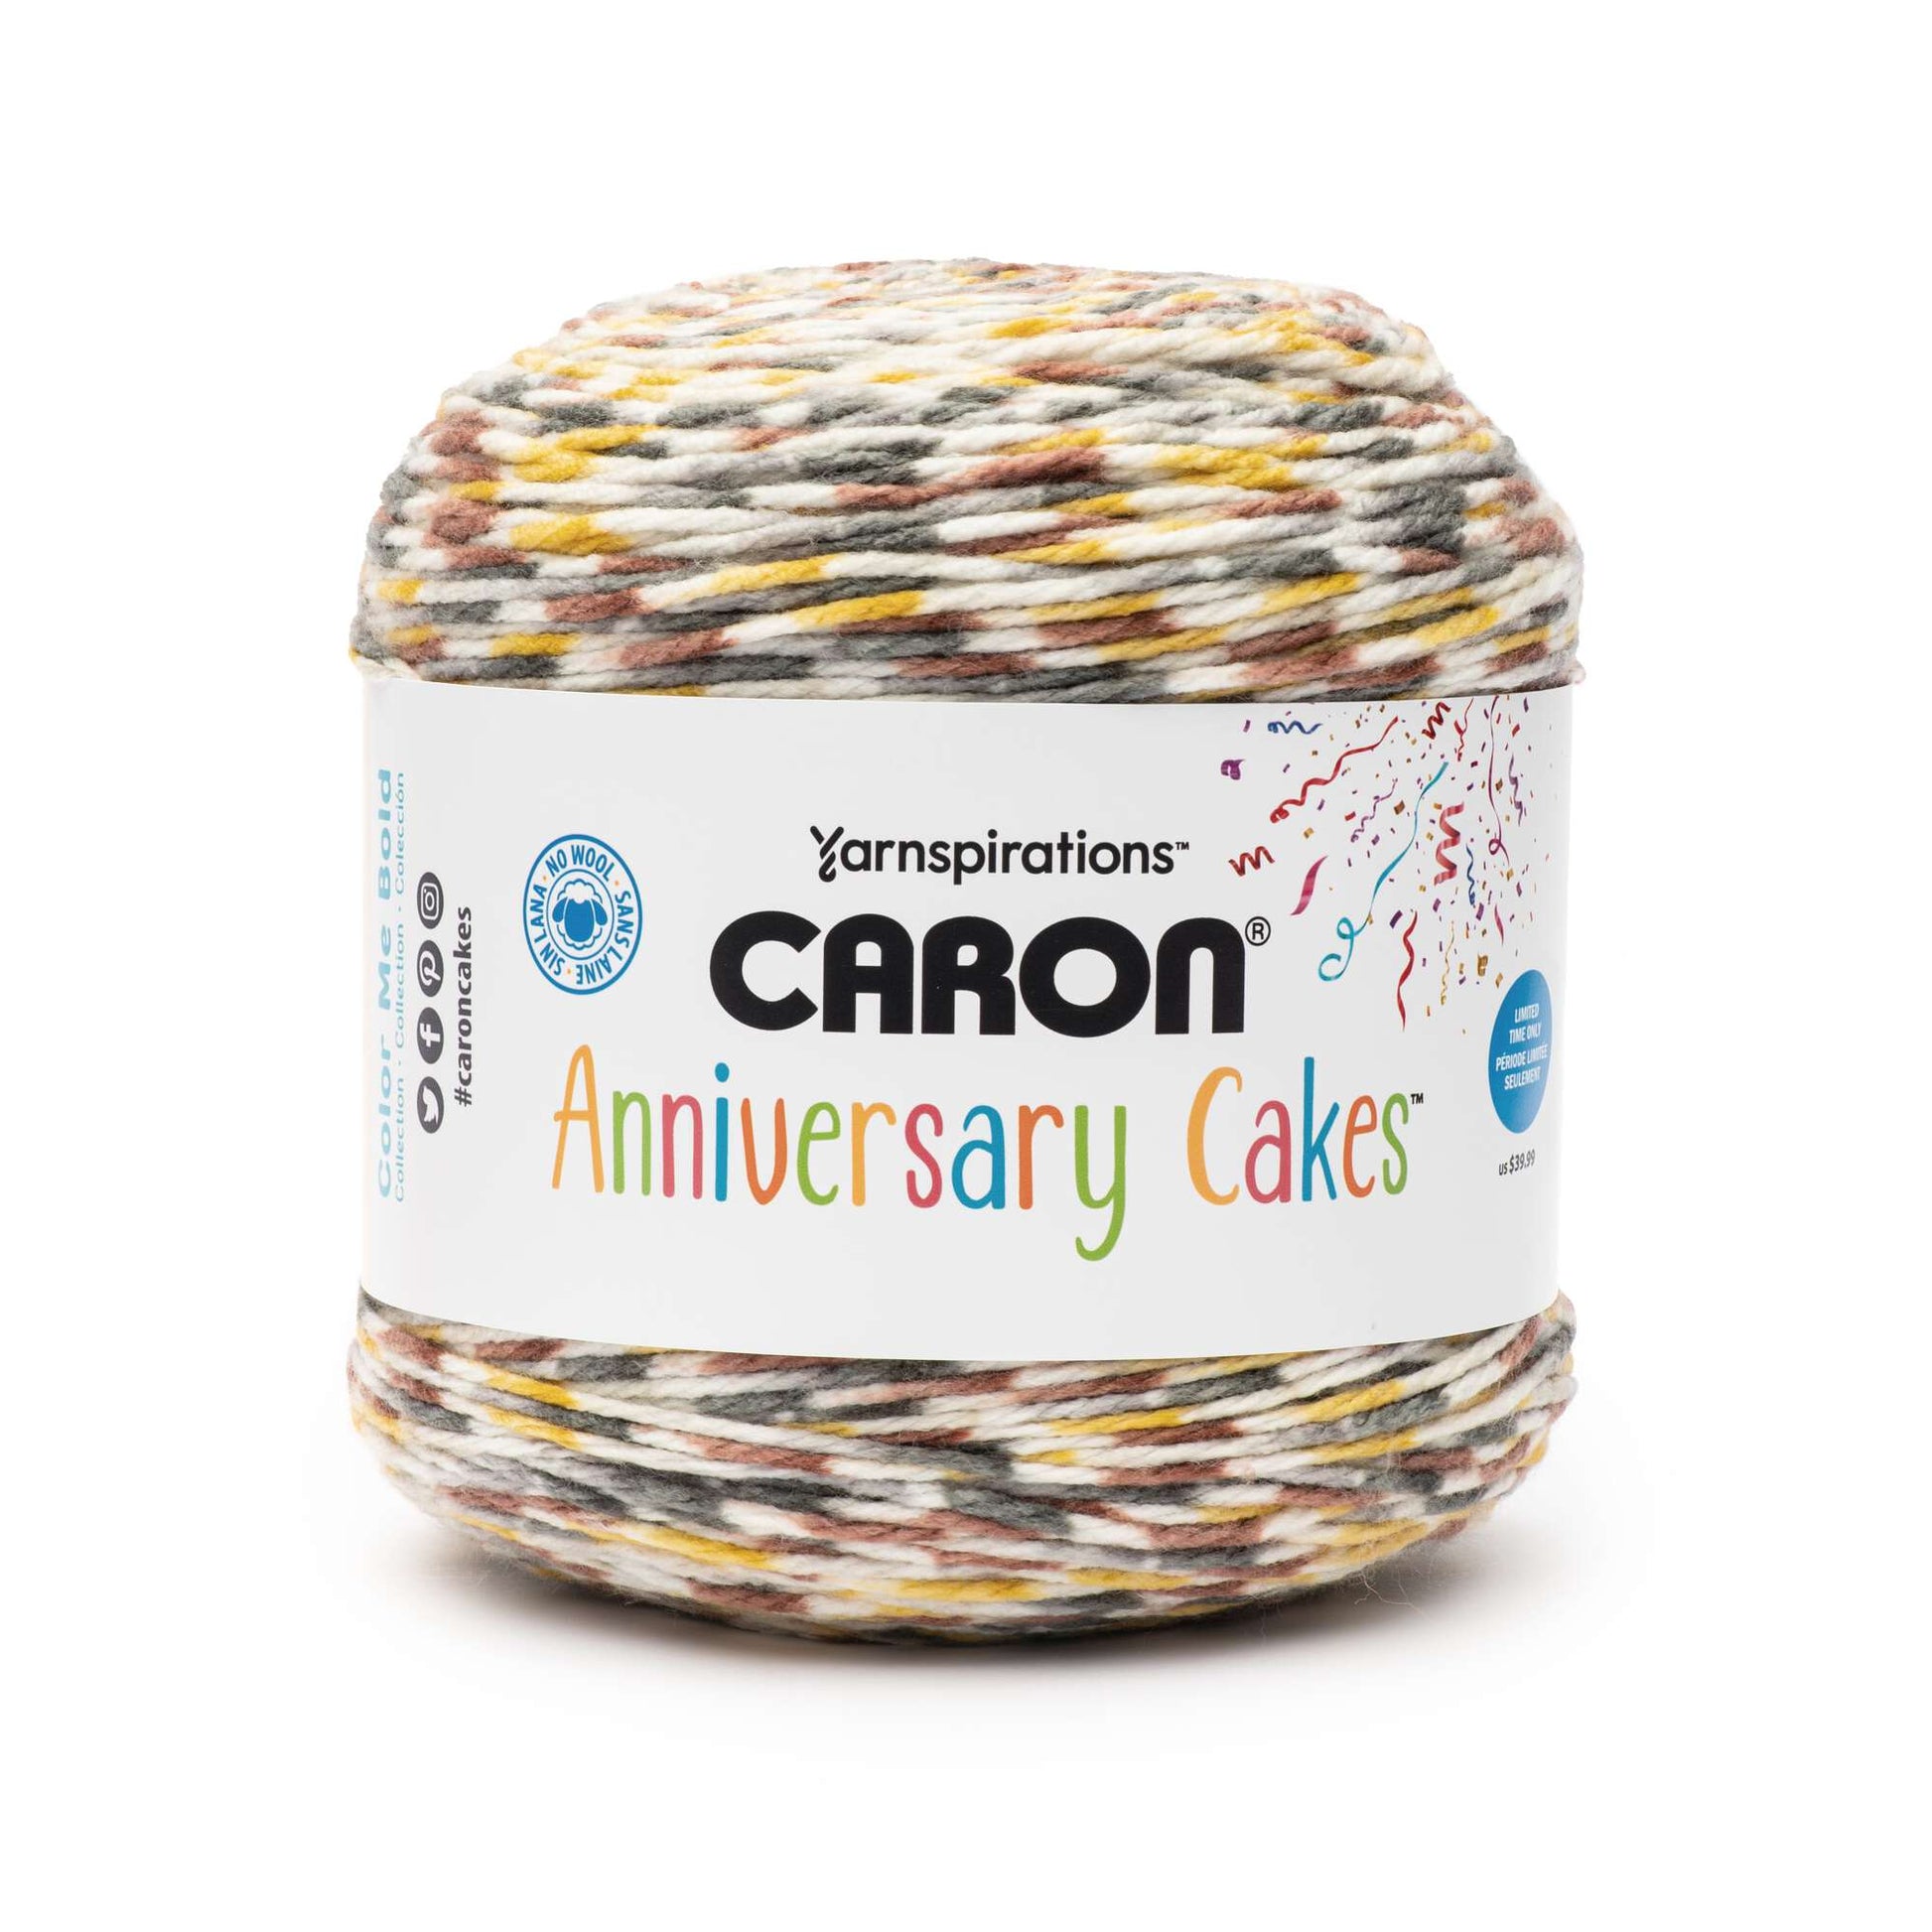 Caron Anniversary Cakes Yarn (1000g/35.3oz) - Clearance Shades Spice Dots